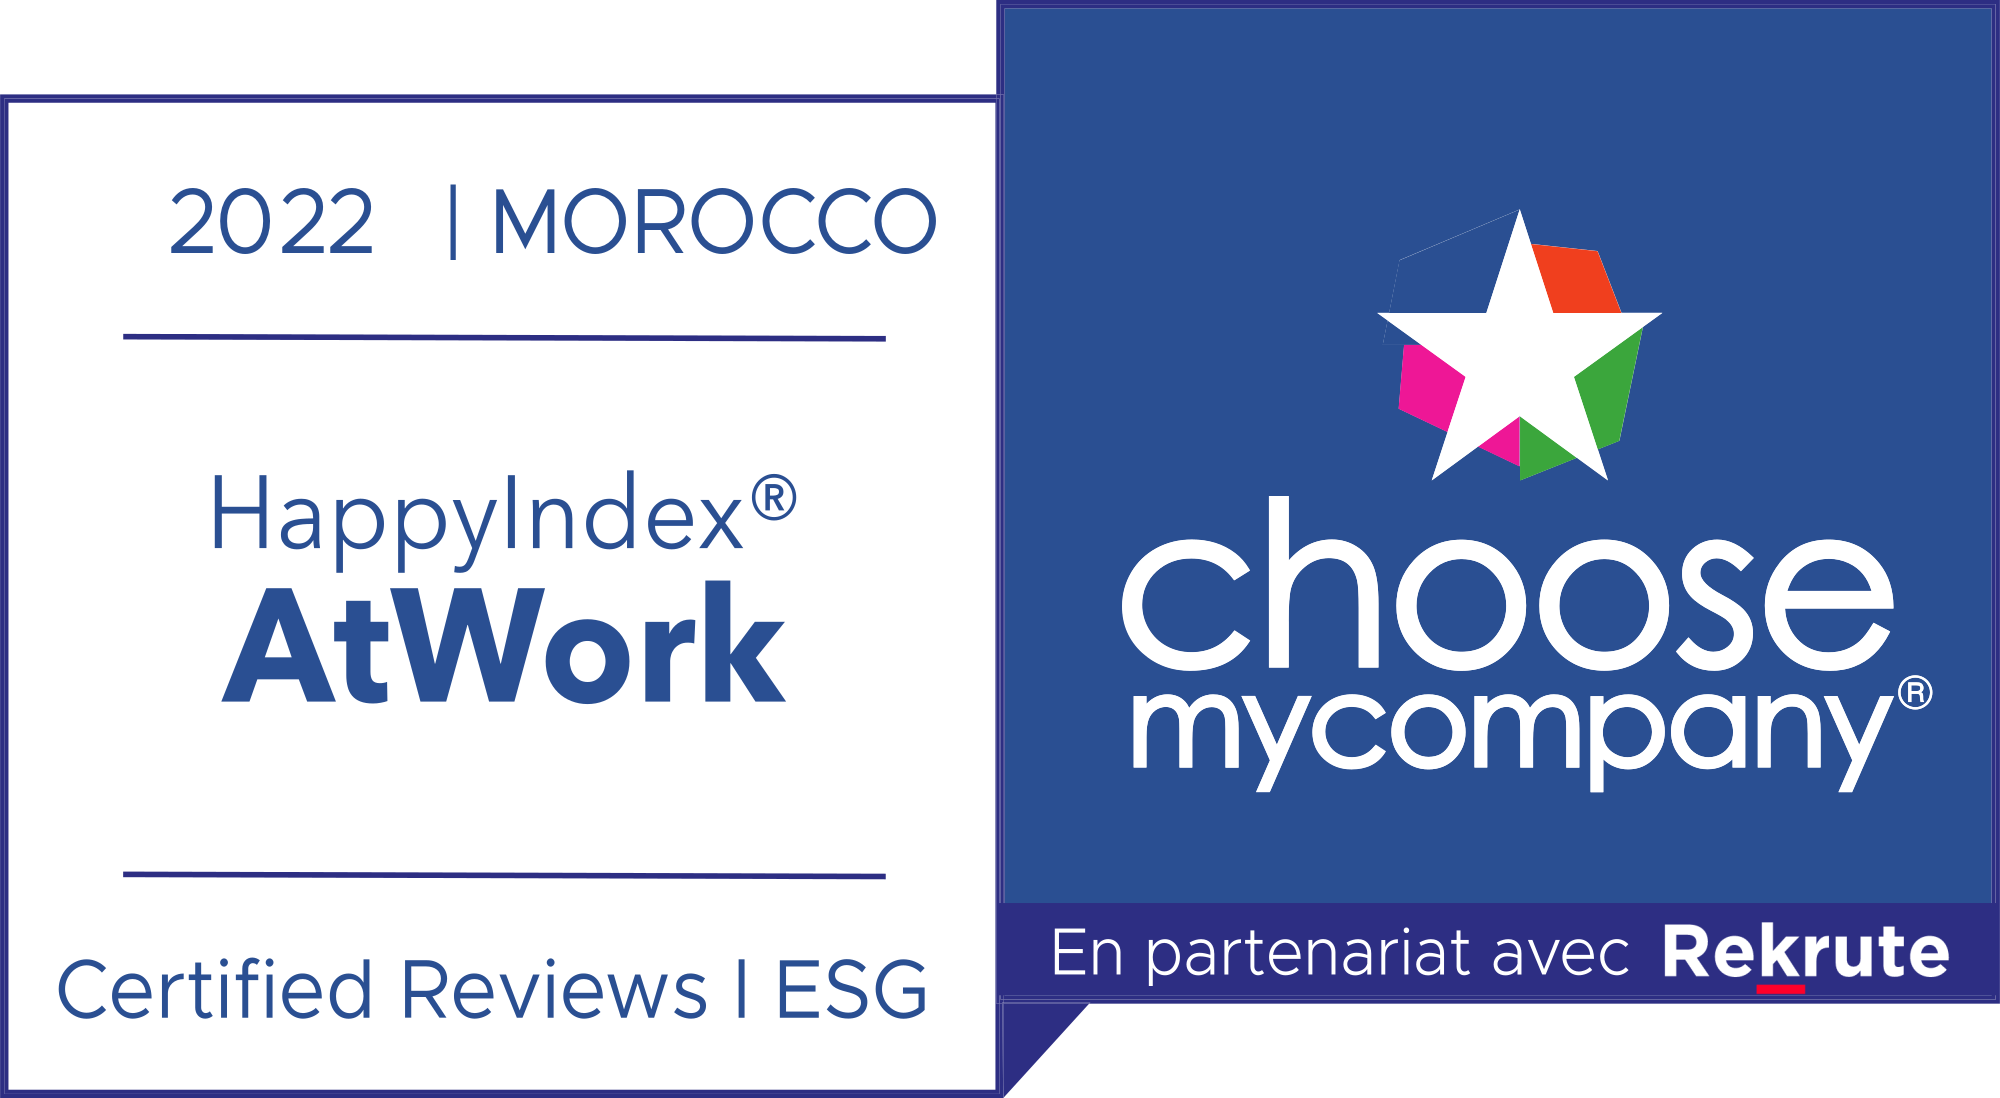 Label HappyIndex®AtWork | Morocco 2022